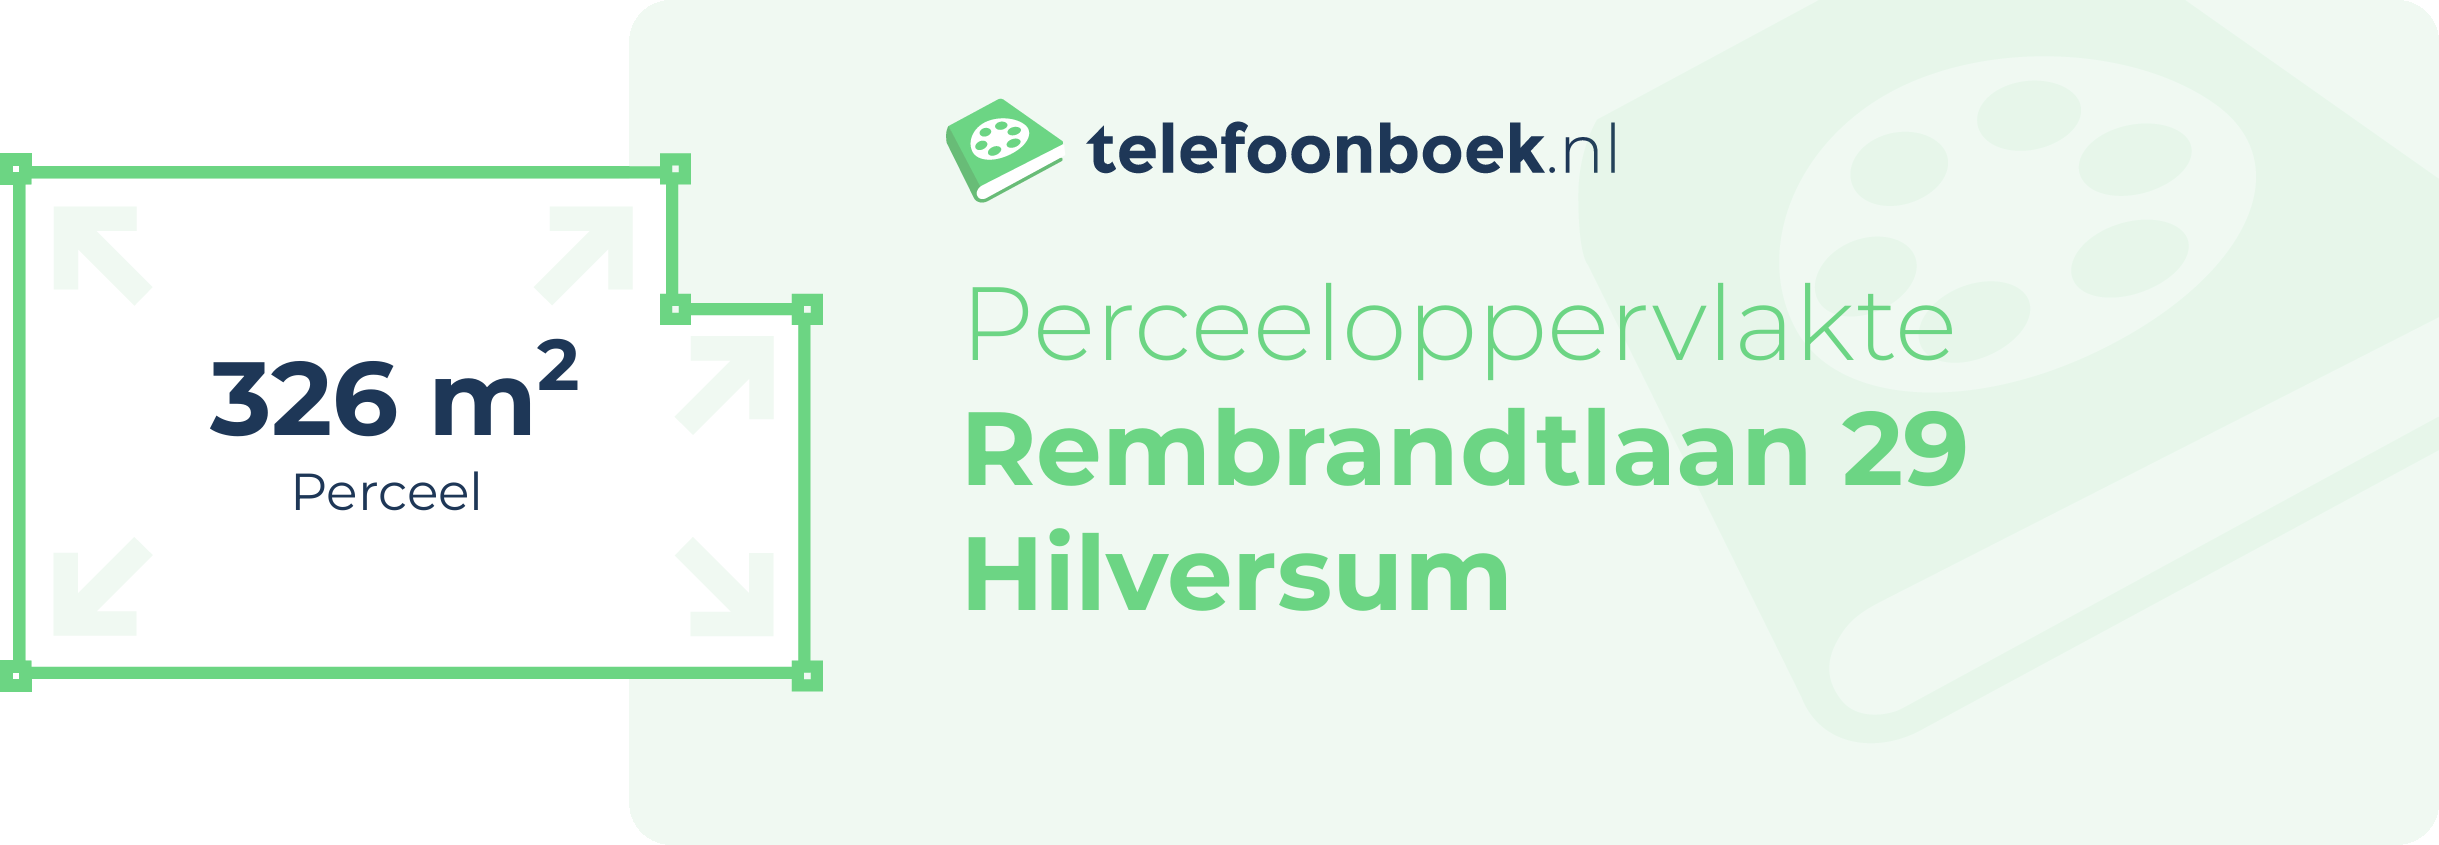 Perceeloppervlakte Rembrandtlaan 29 Hilversum